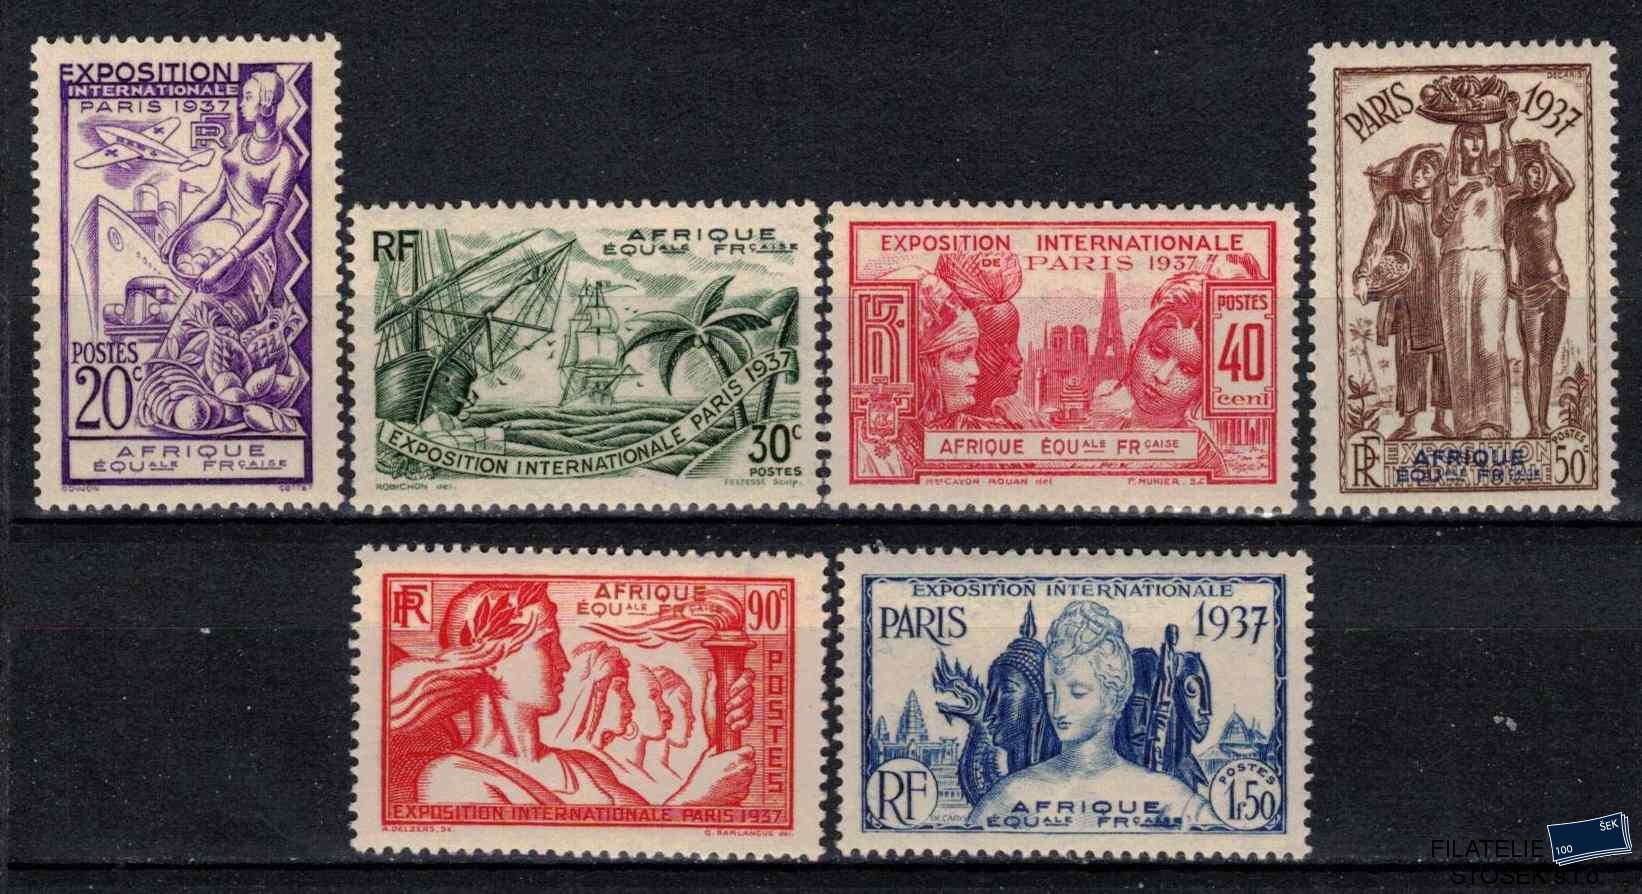 Afr. equatoriale známky 1937 Exposition internationale de Paris